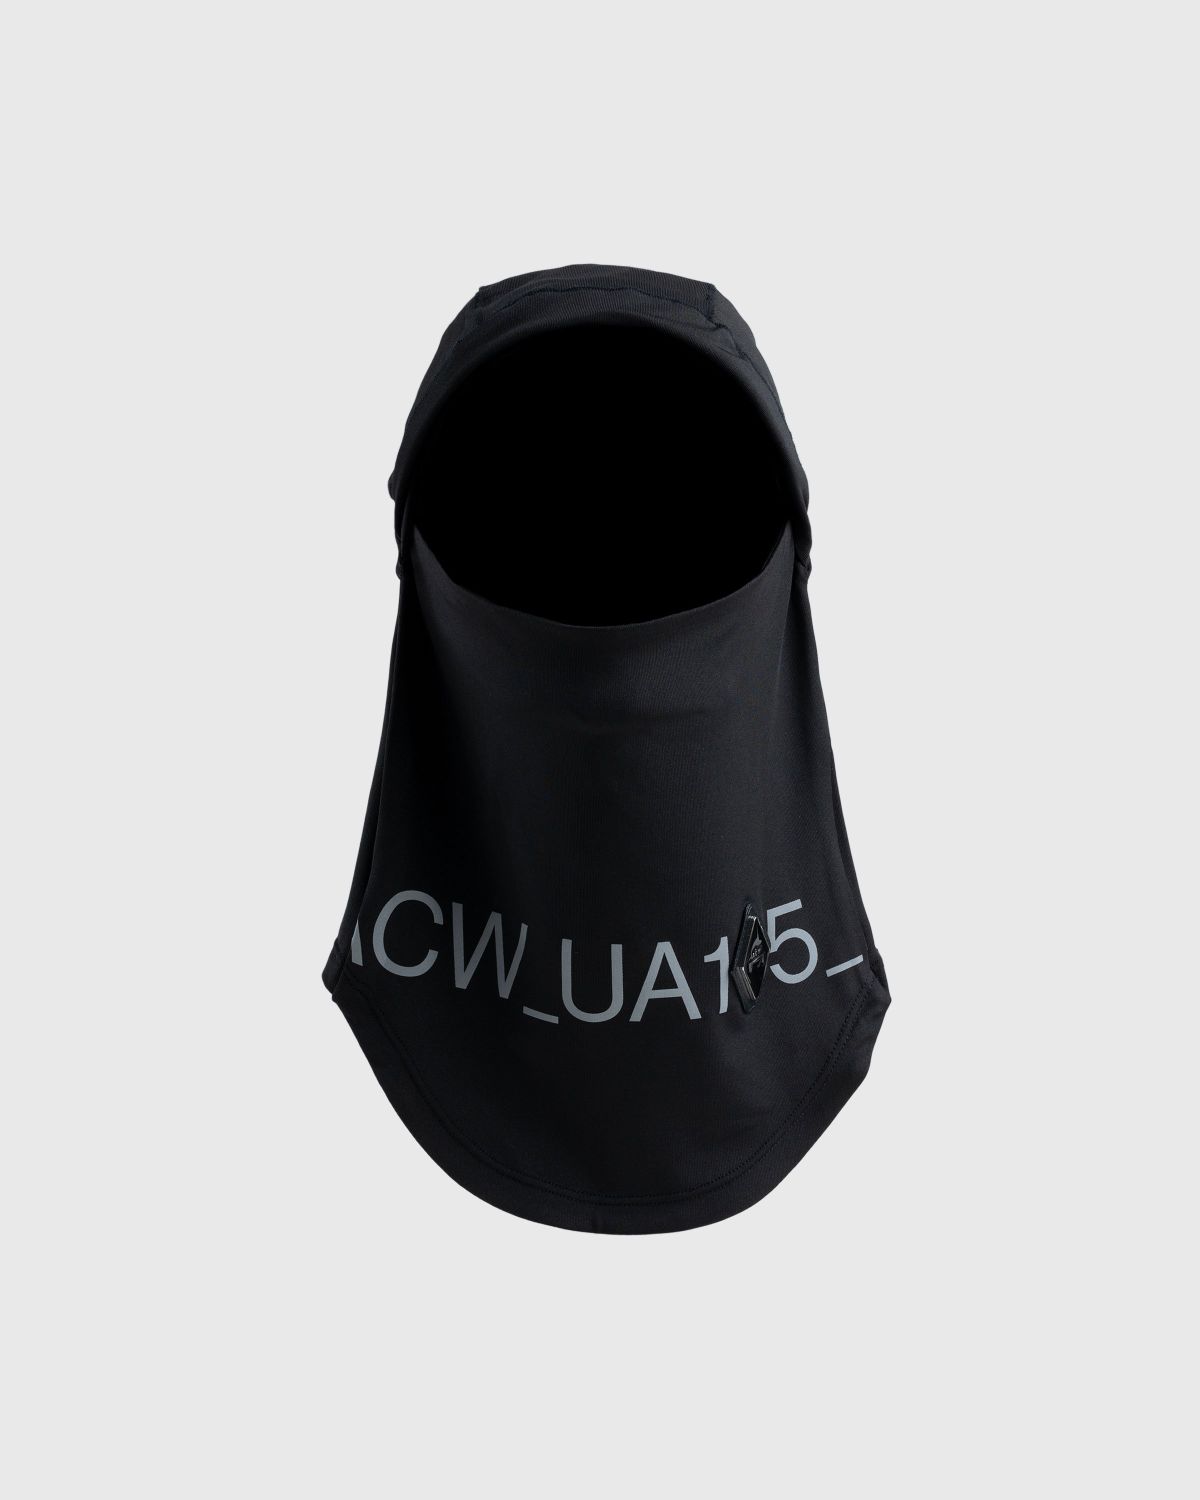 A-Cold-Wall* – Core Balaclava Black - Hats - here - Image 1